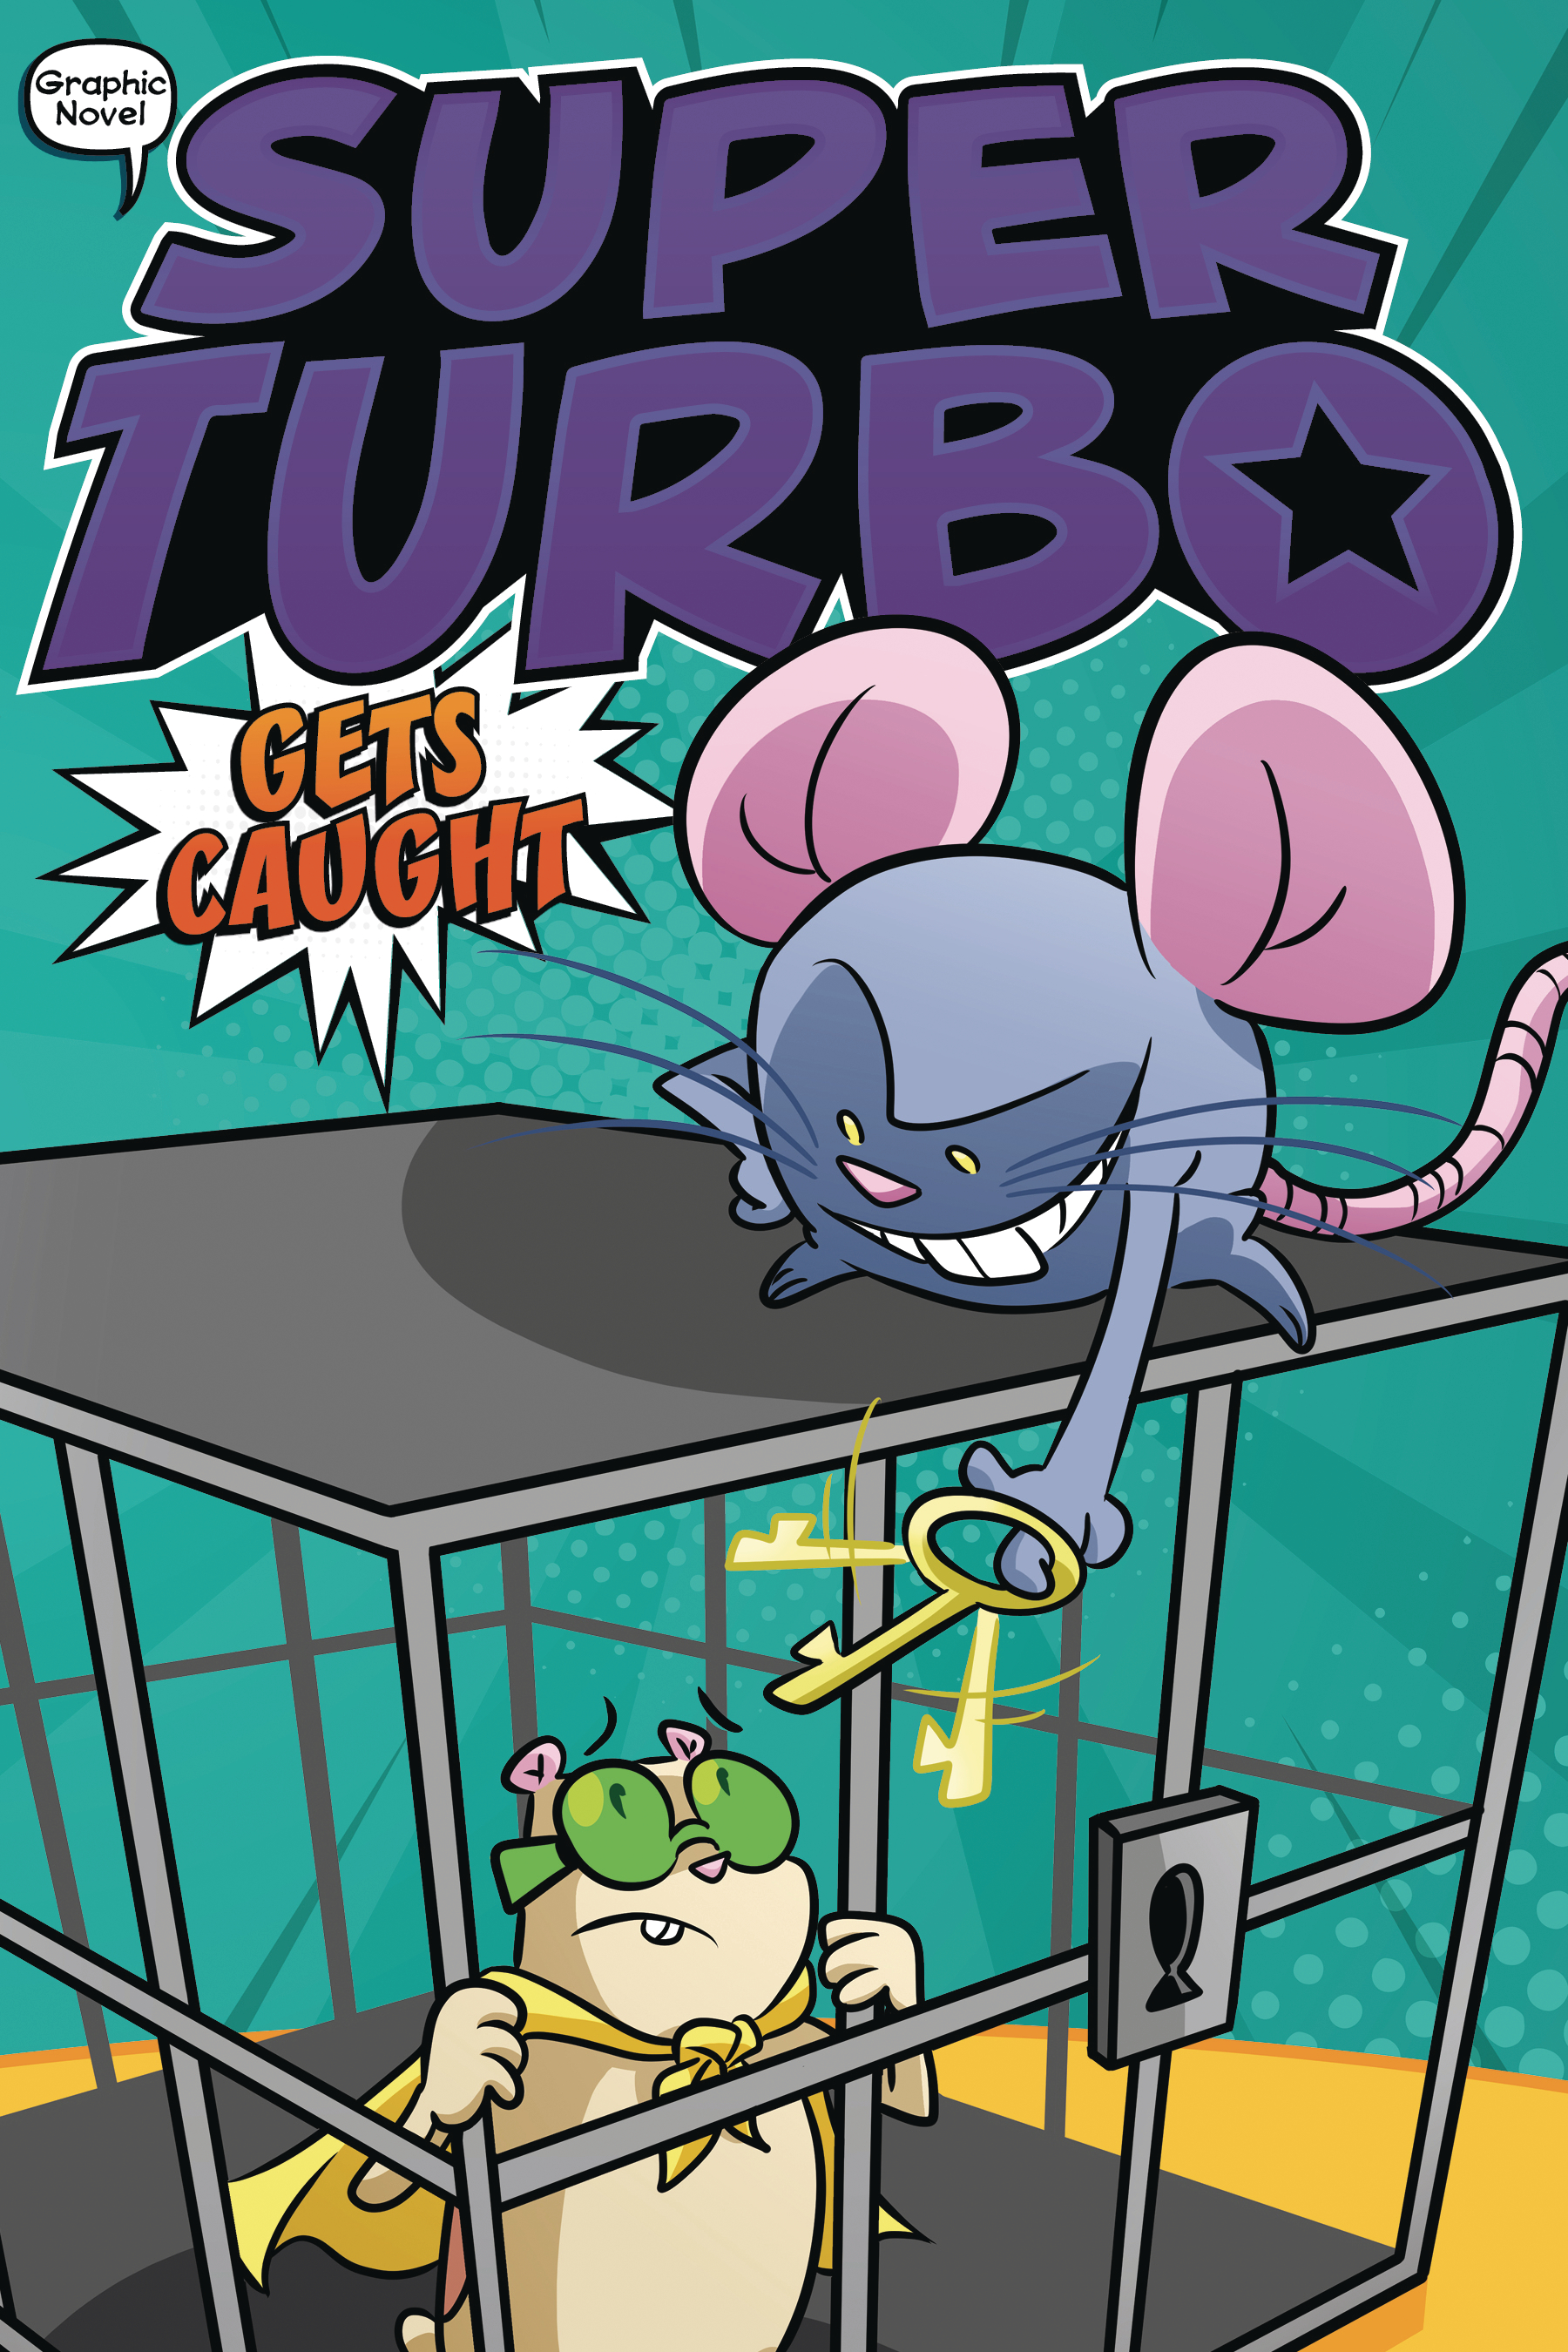 Super Turbo Graphic Novel Volume 8 Gets Caught